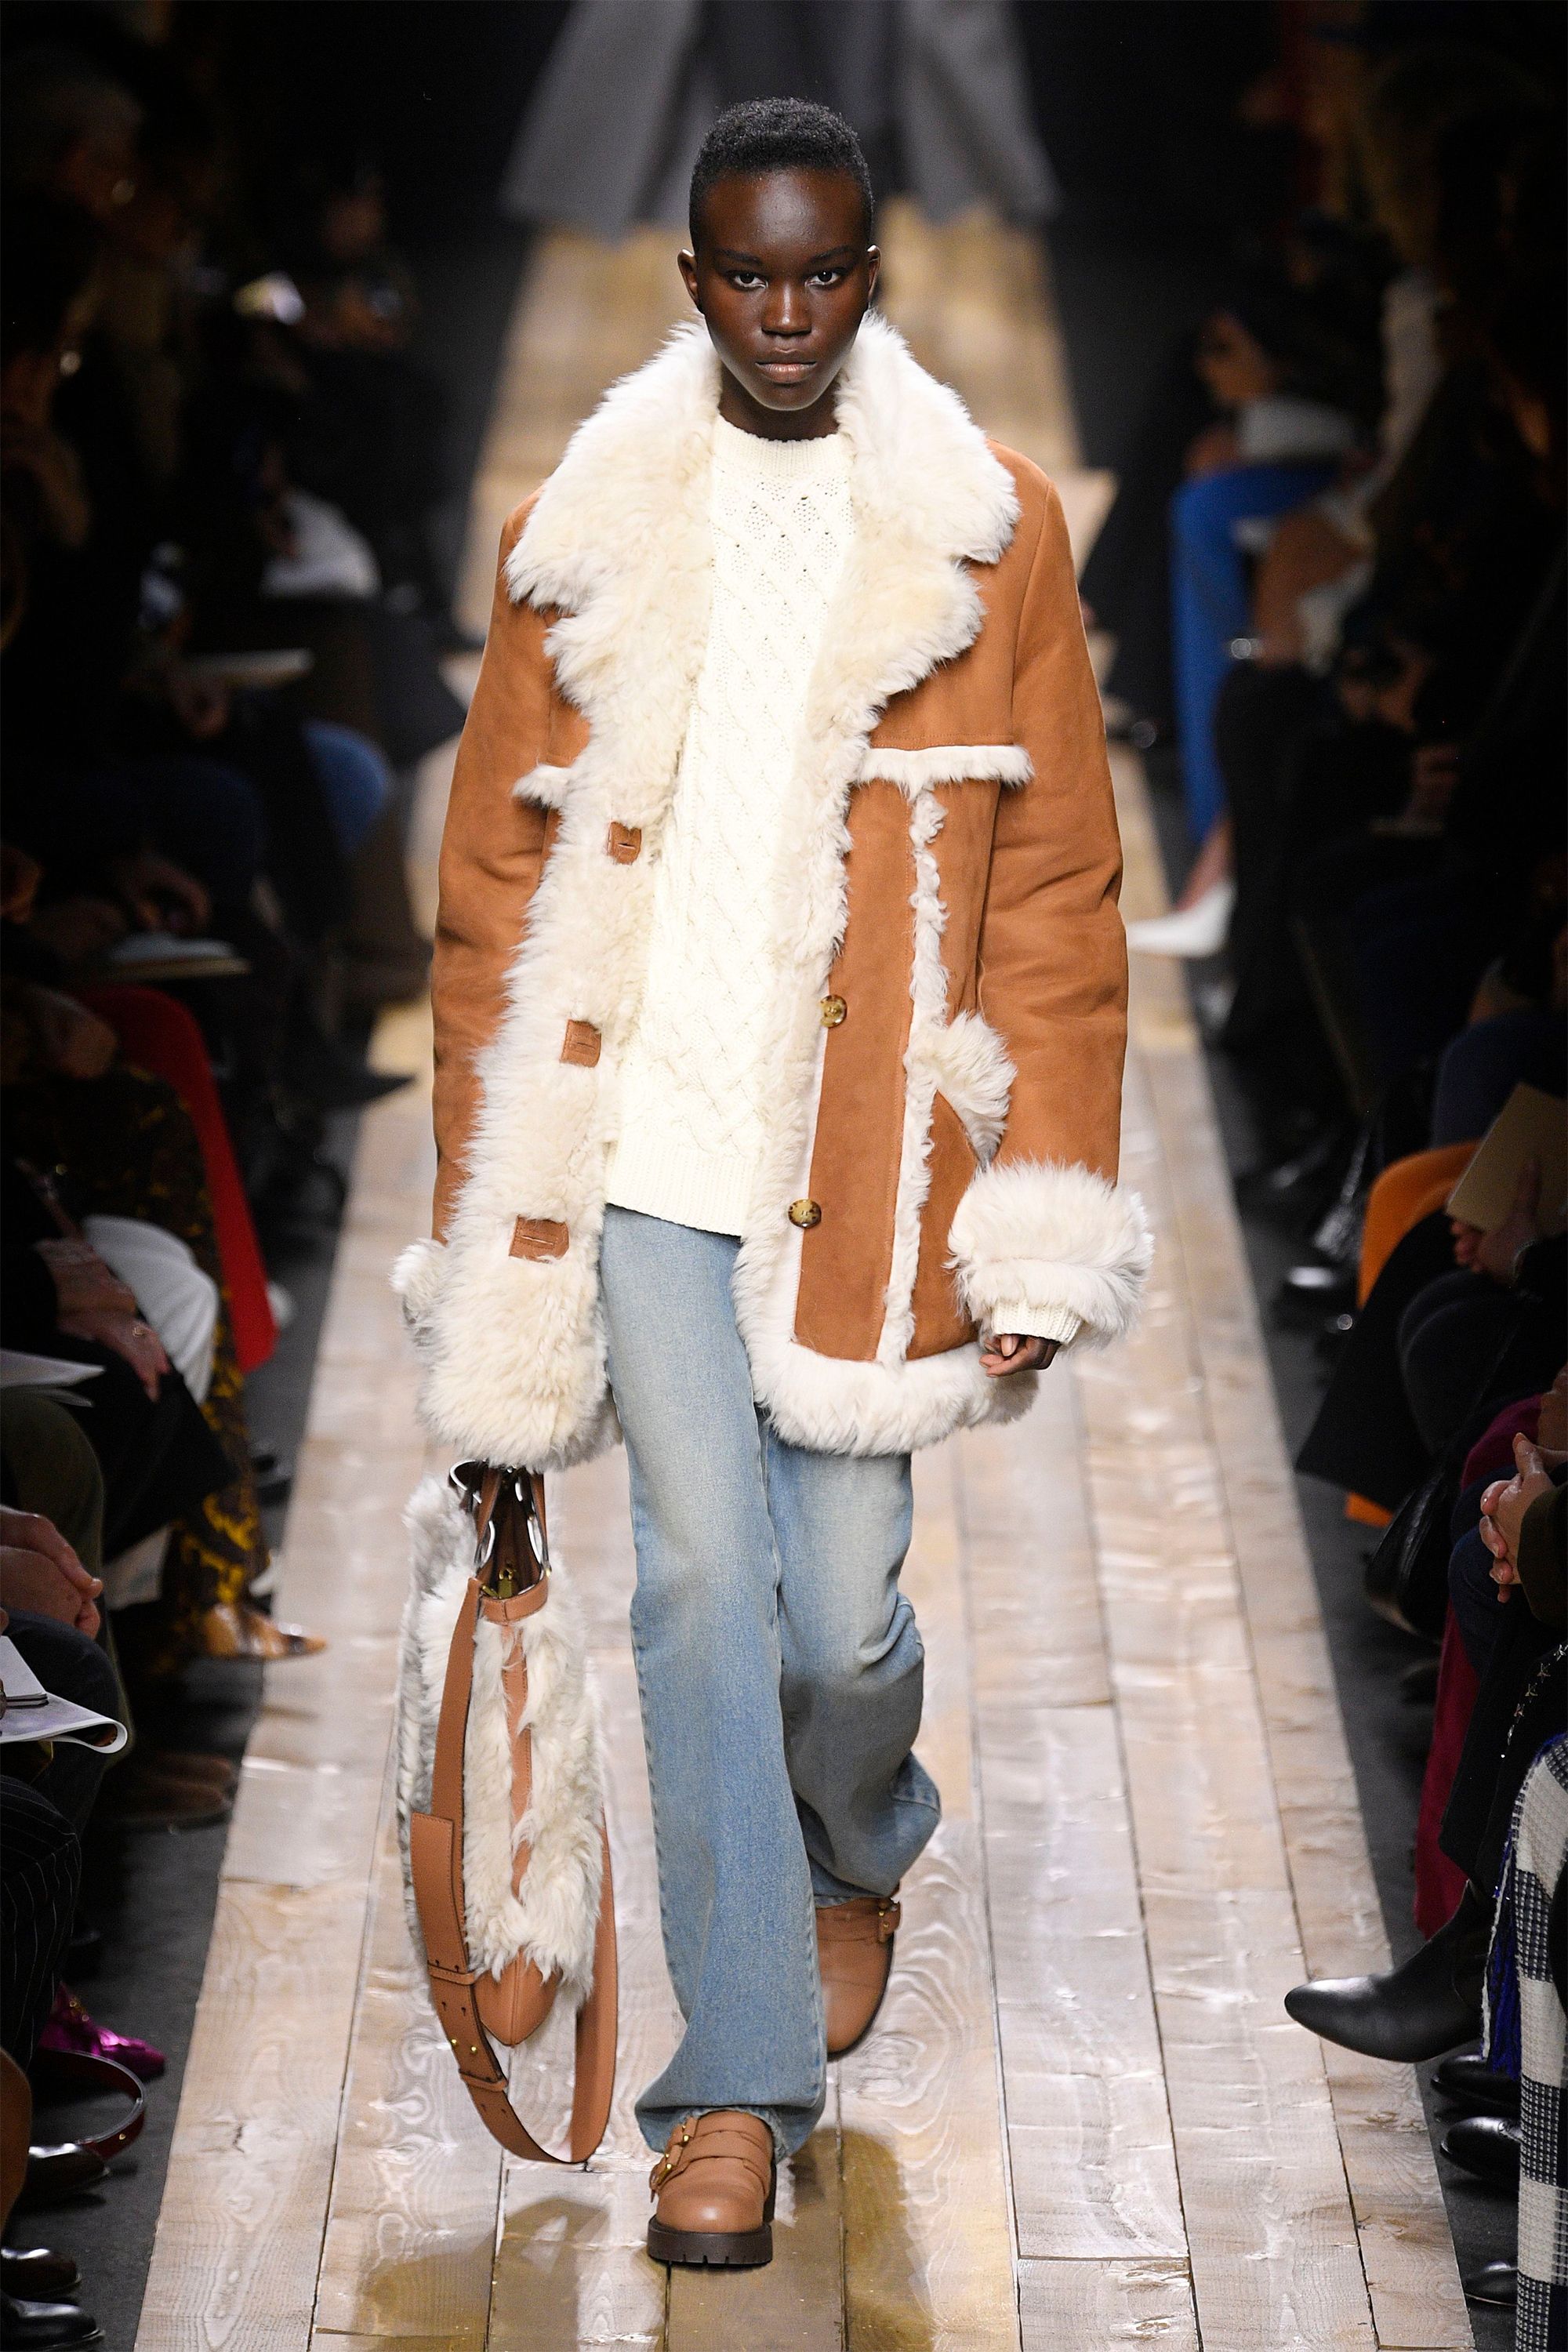 New York City, USA. 20th Feb, 2020. American fashion brand Michael Kors  stall seen in a